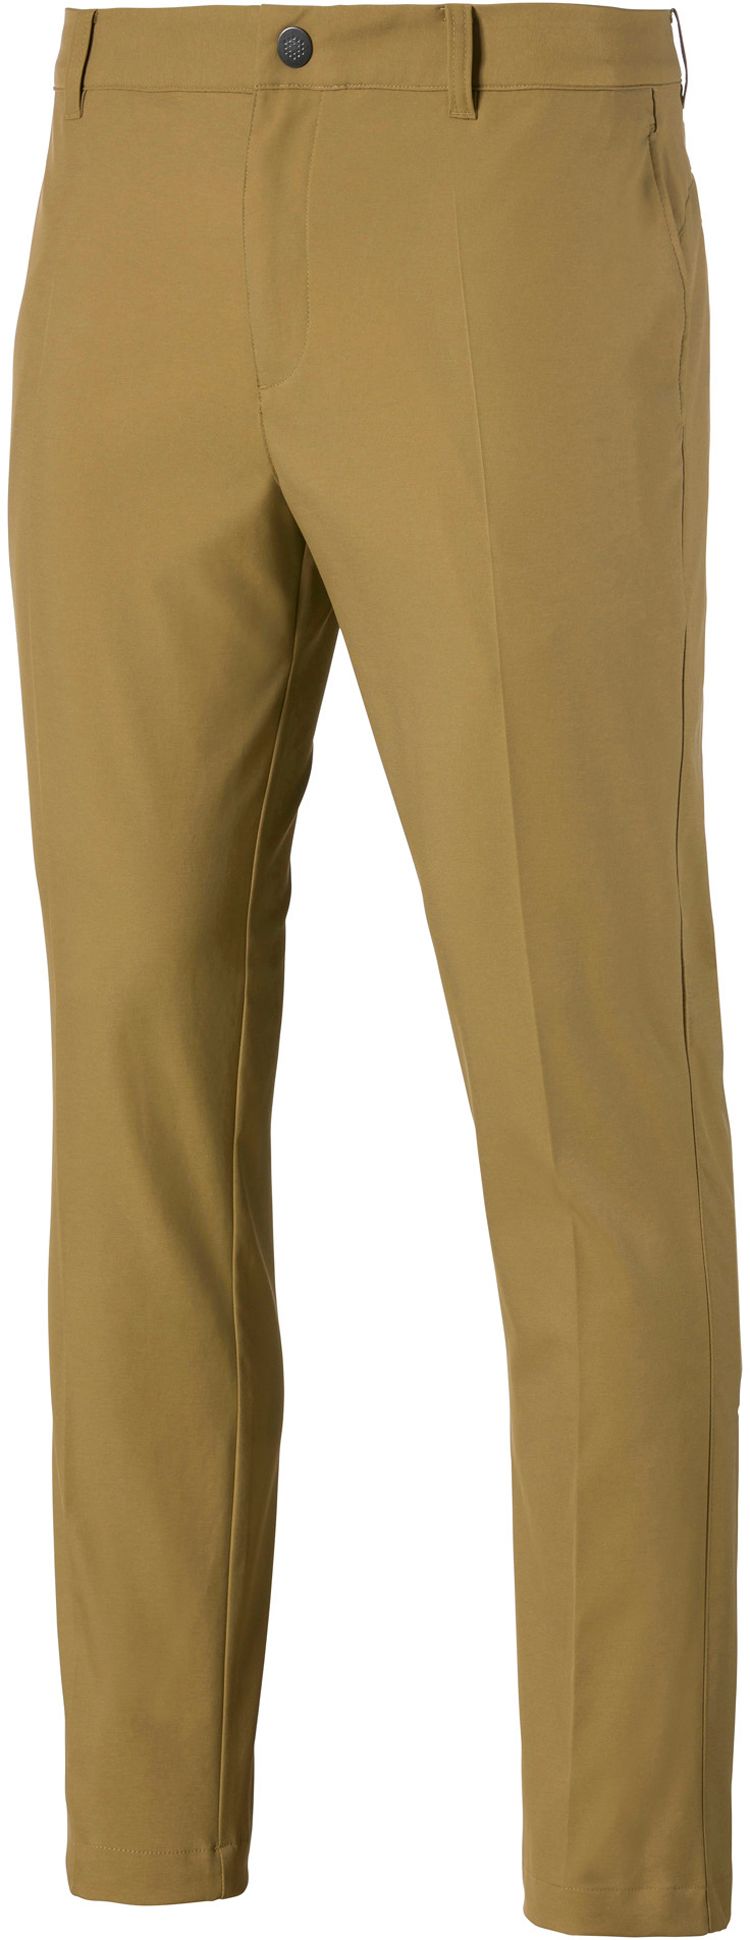 puma tapered golf pants